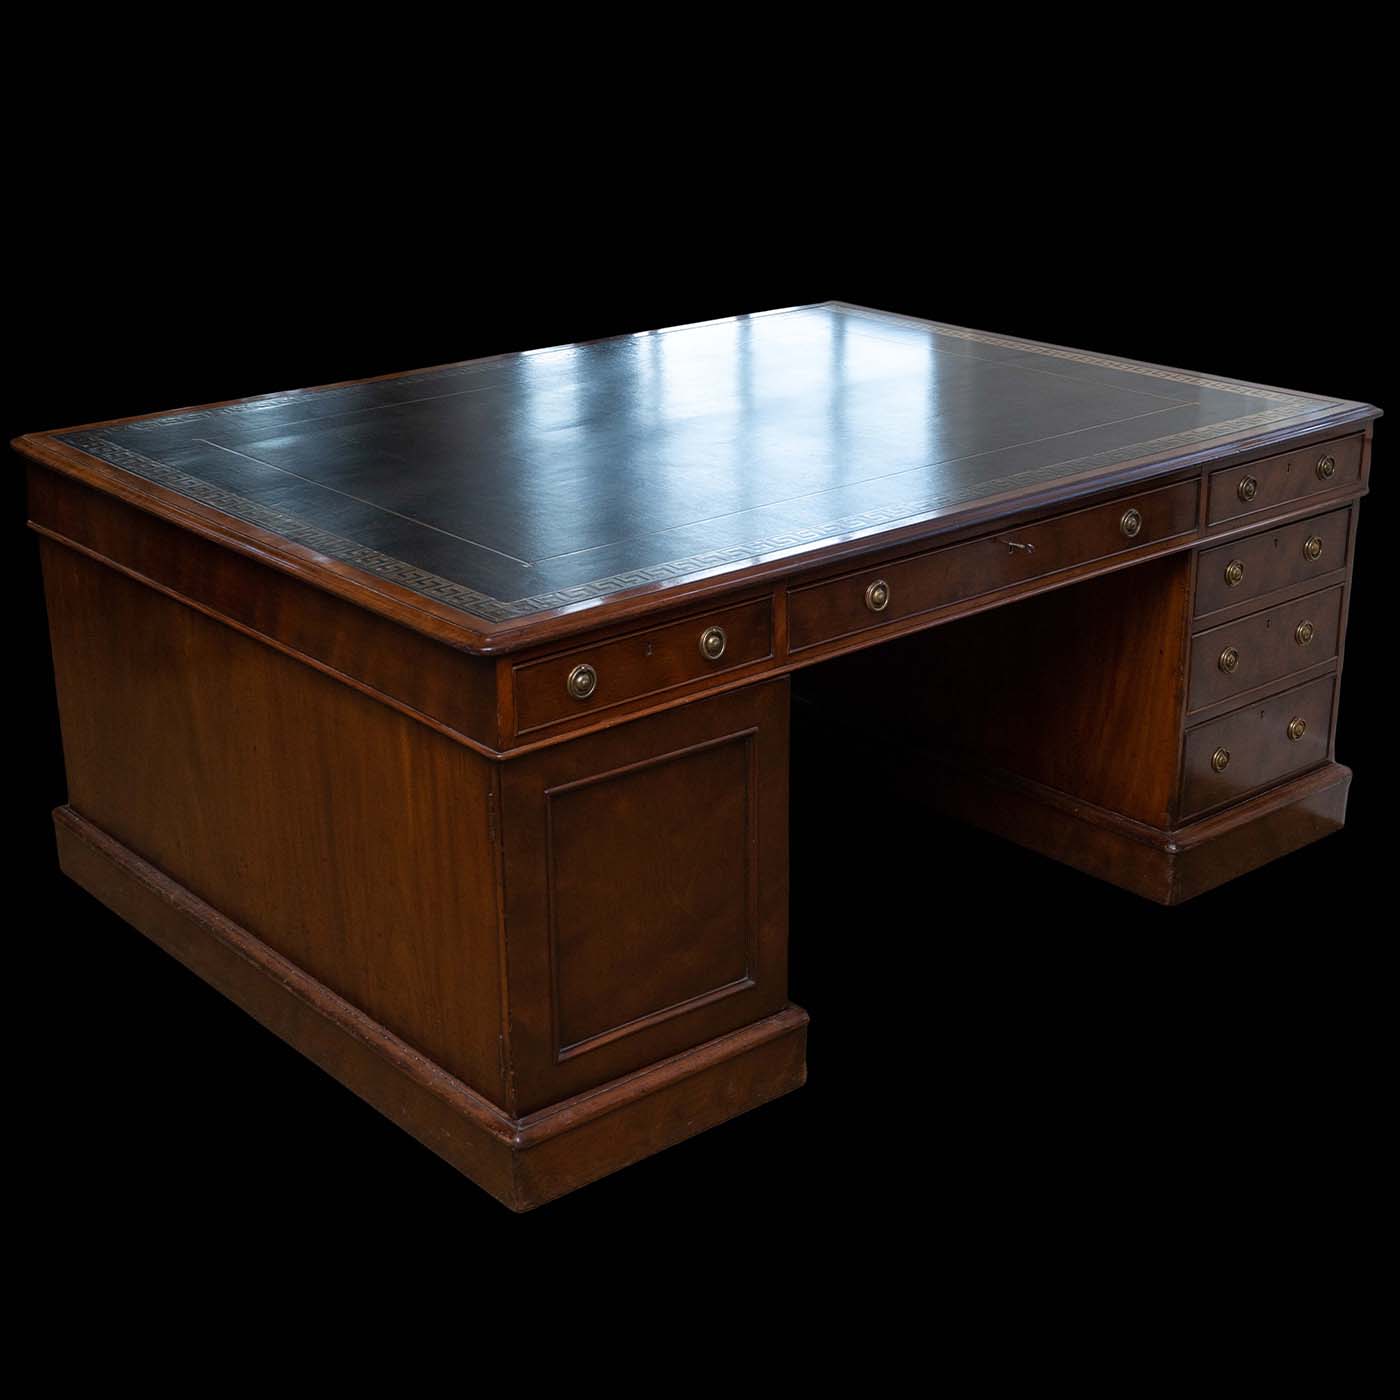 Monumental Victorian Mahogany Partners Desk from the 19th Century